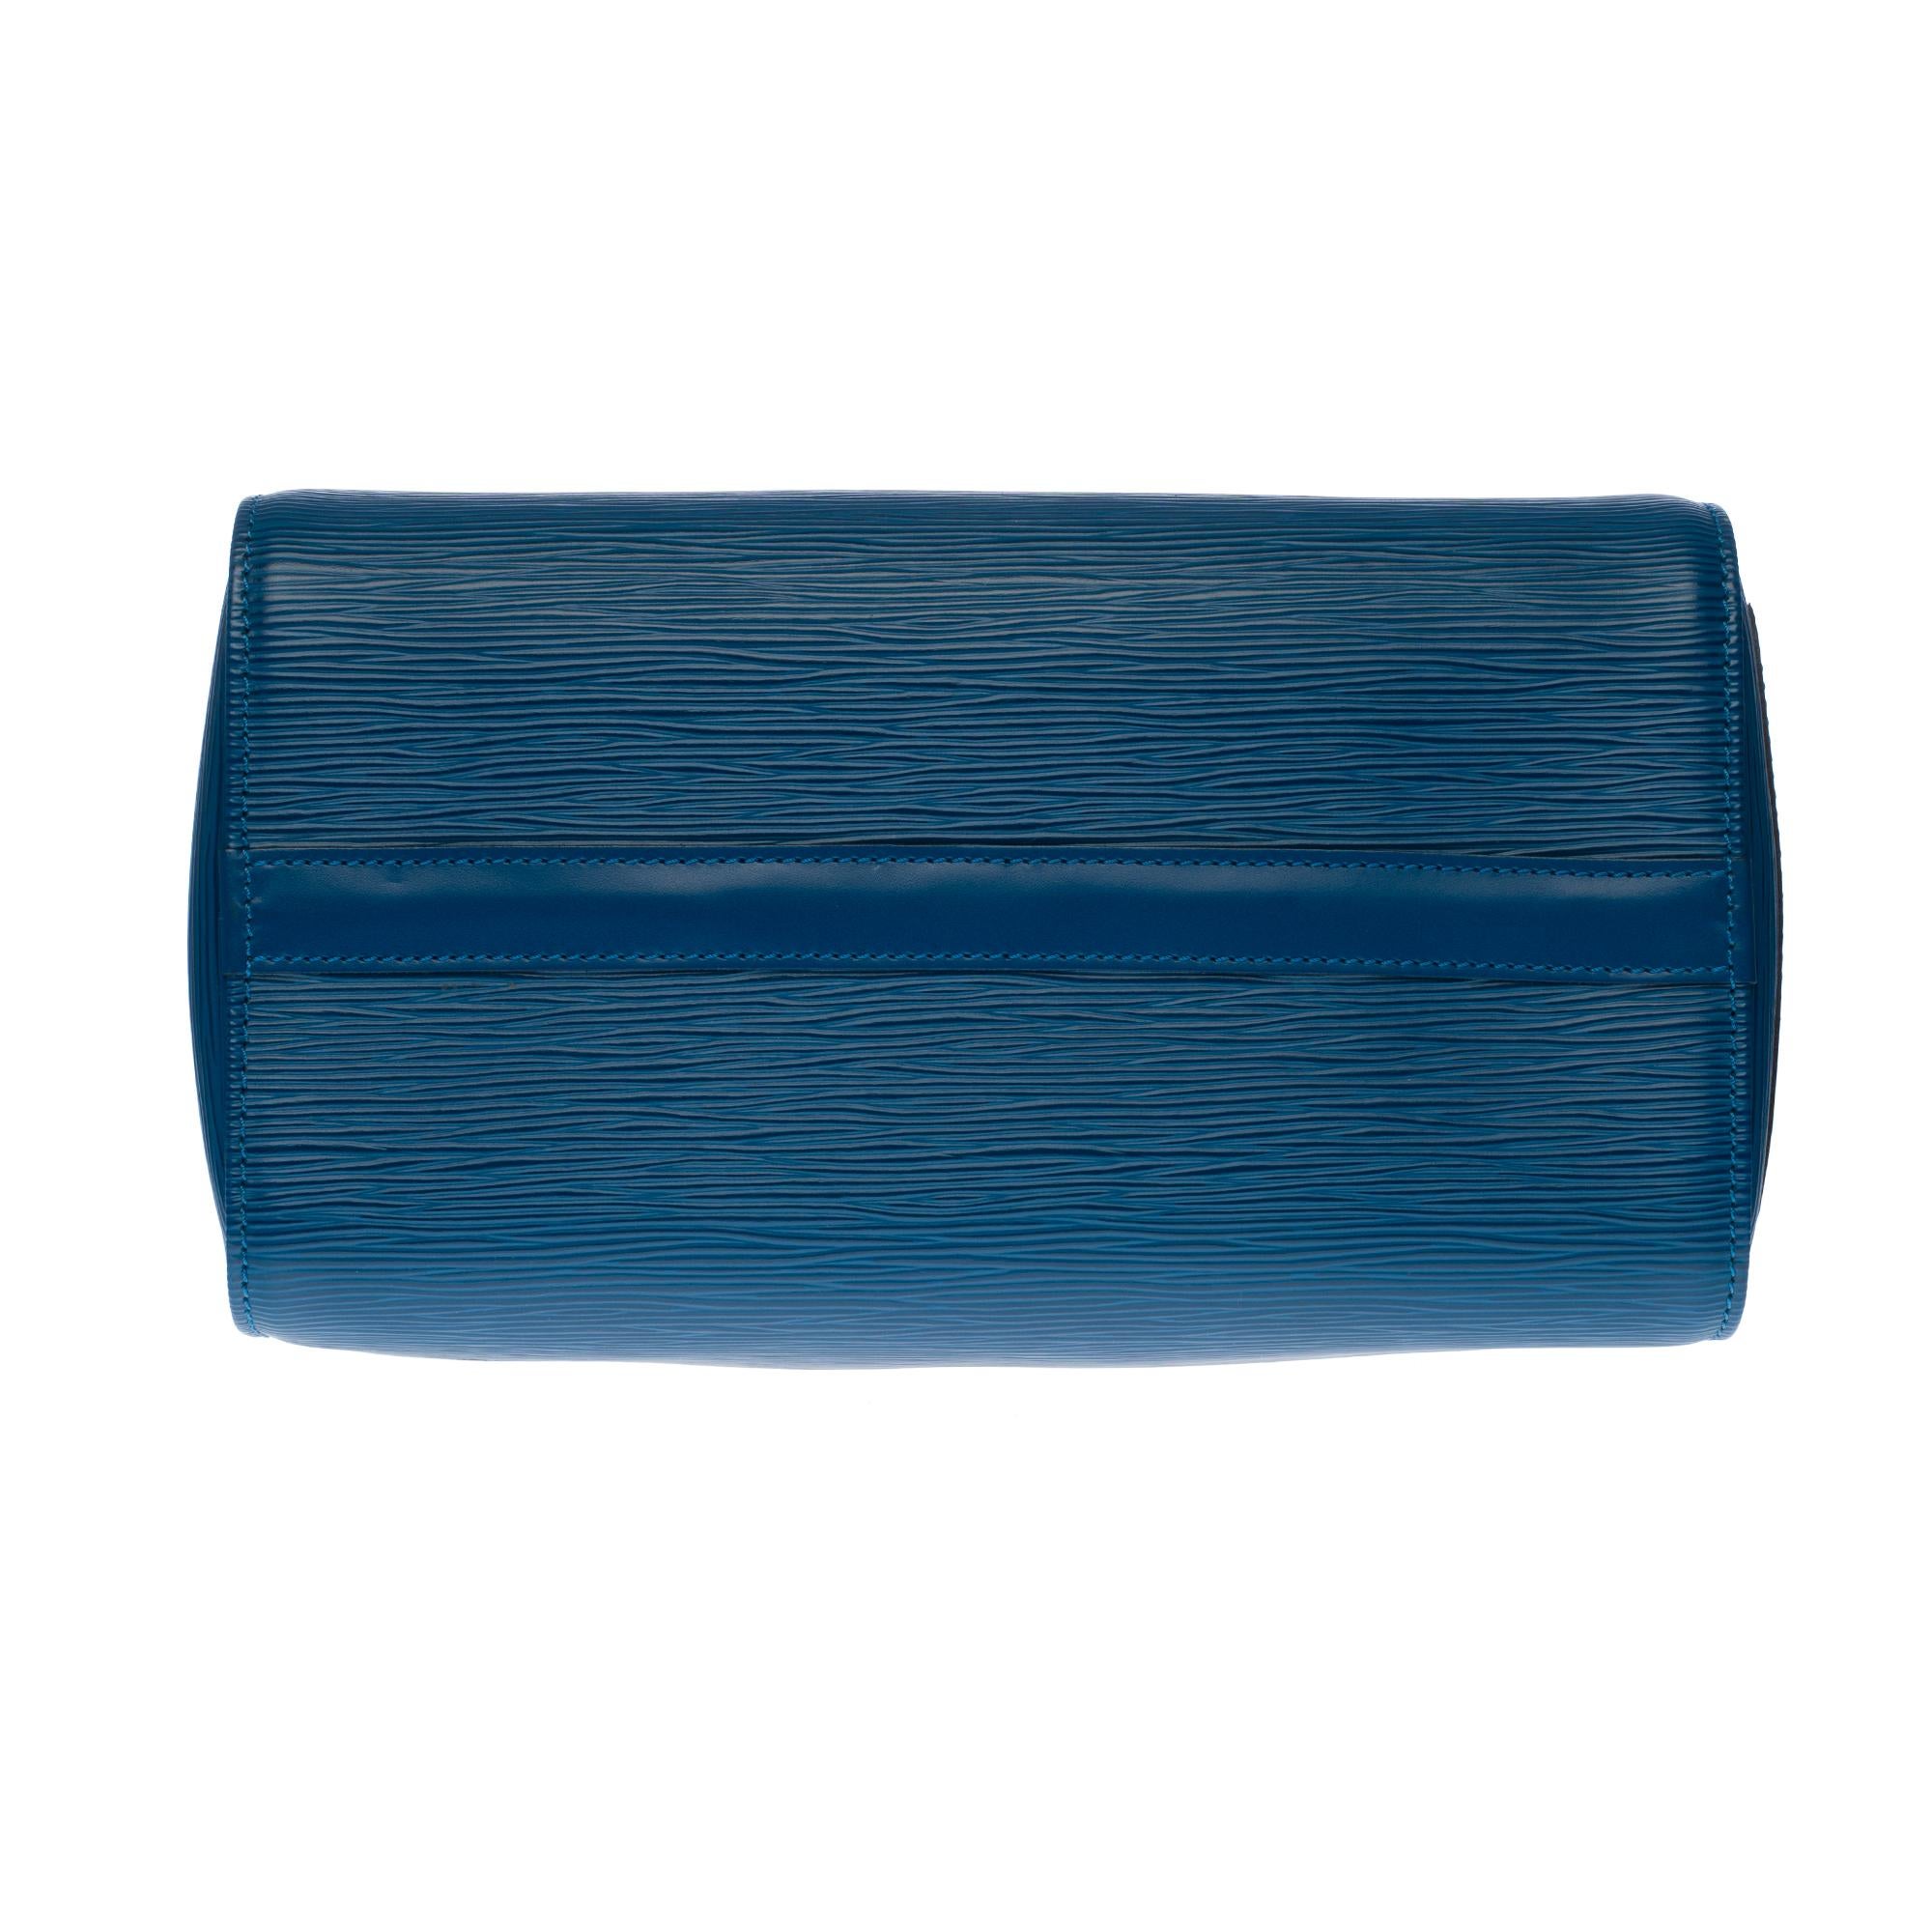 Louis Vuitton Speedy 30 handbag in blue épi leather and gold hardware 2